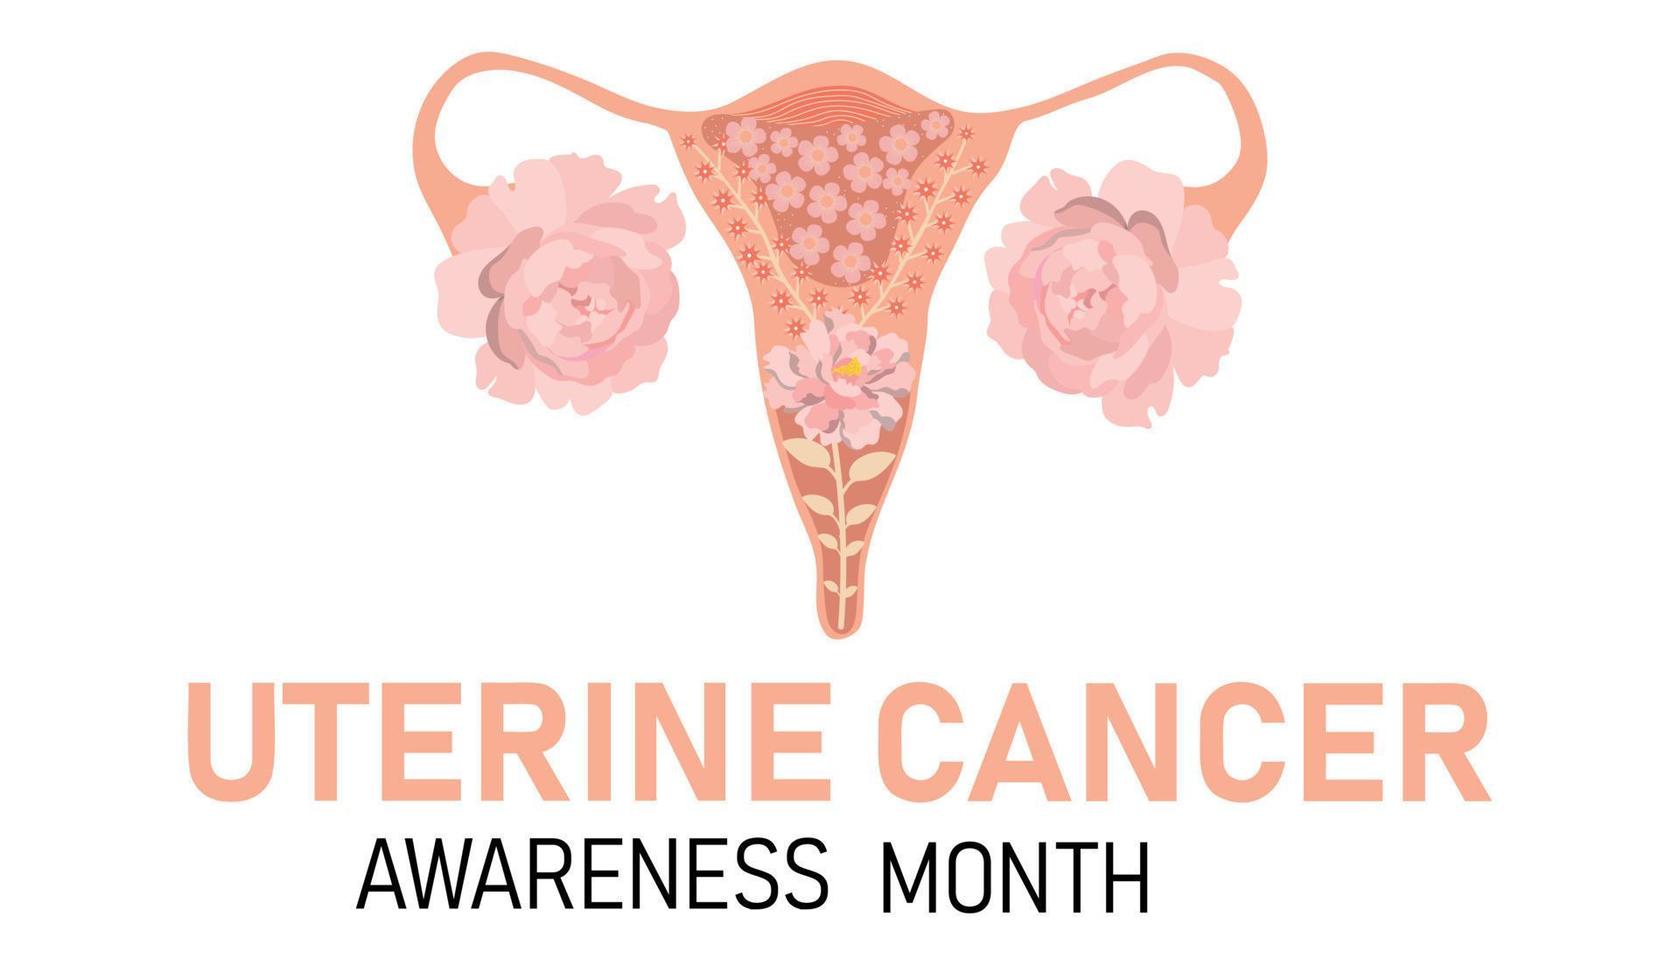 Uterine Cancer awareness month vector